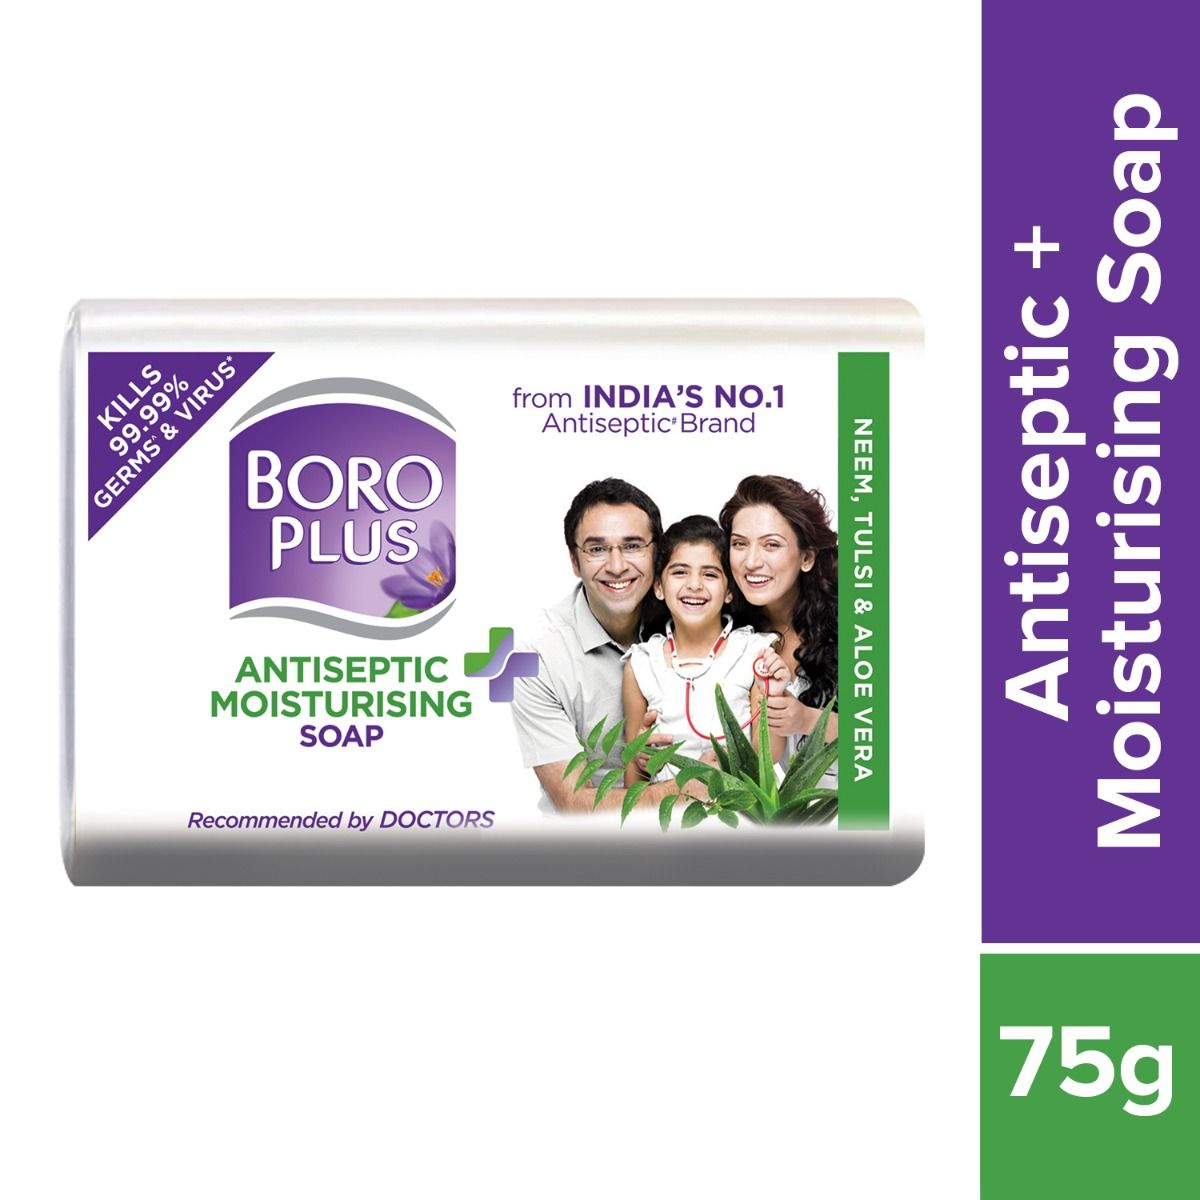 Boroplus Antiseptic + Moisturising Neem, Tulsi & Aloe Vera Soap, 75 gm, Pack of 1 